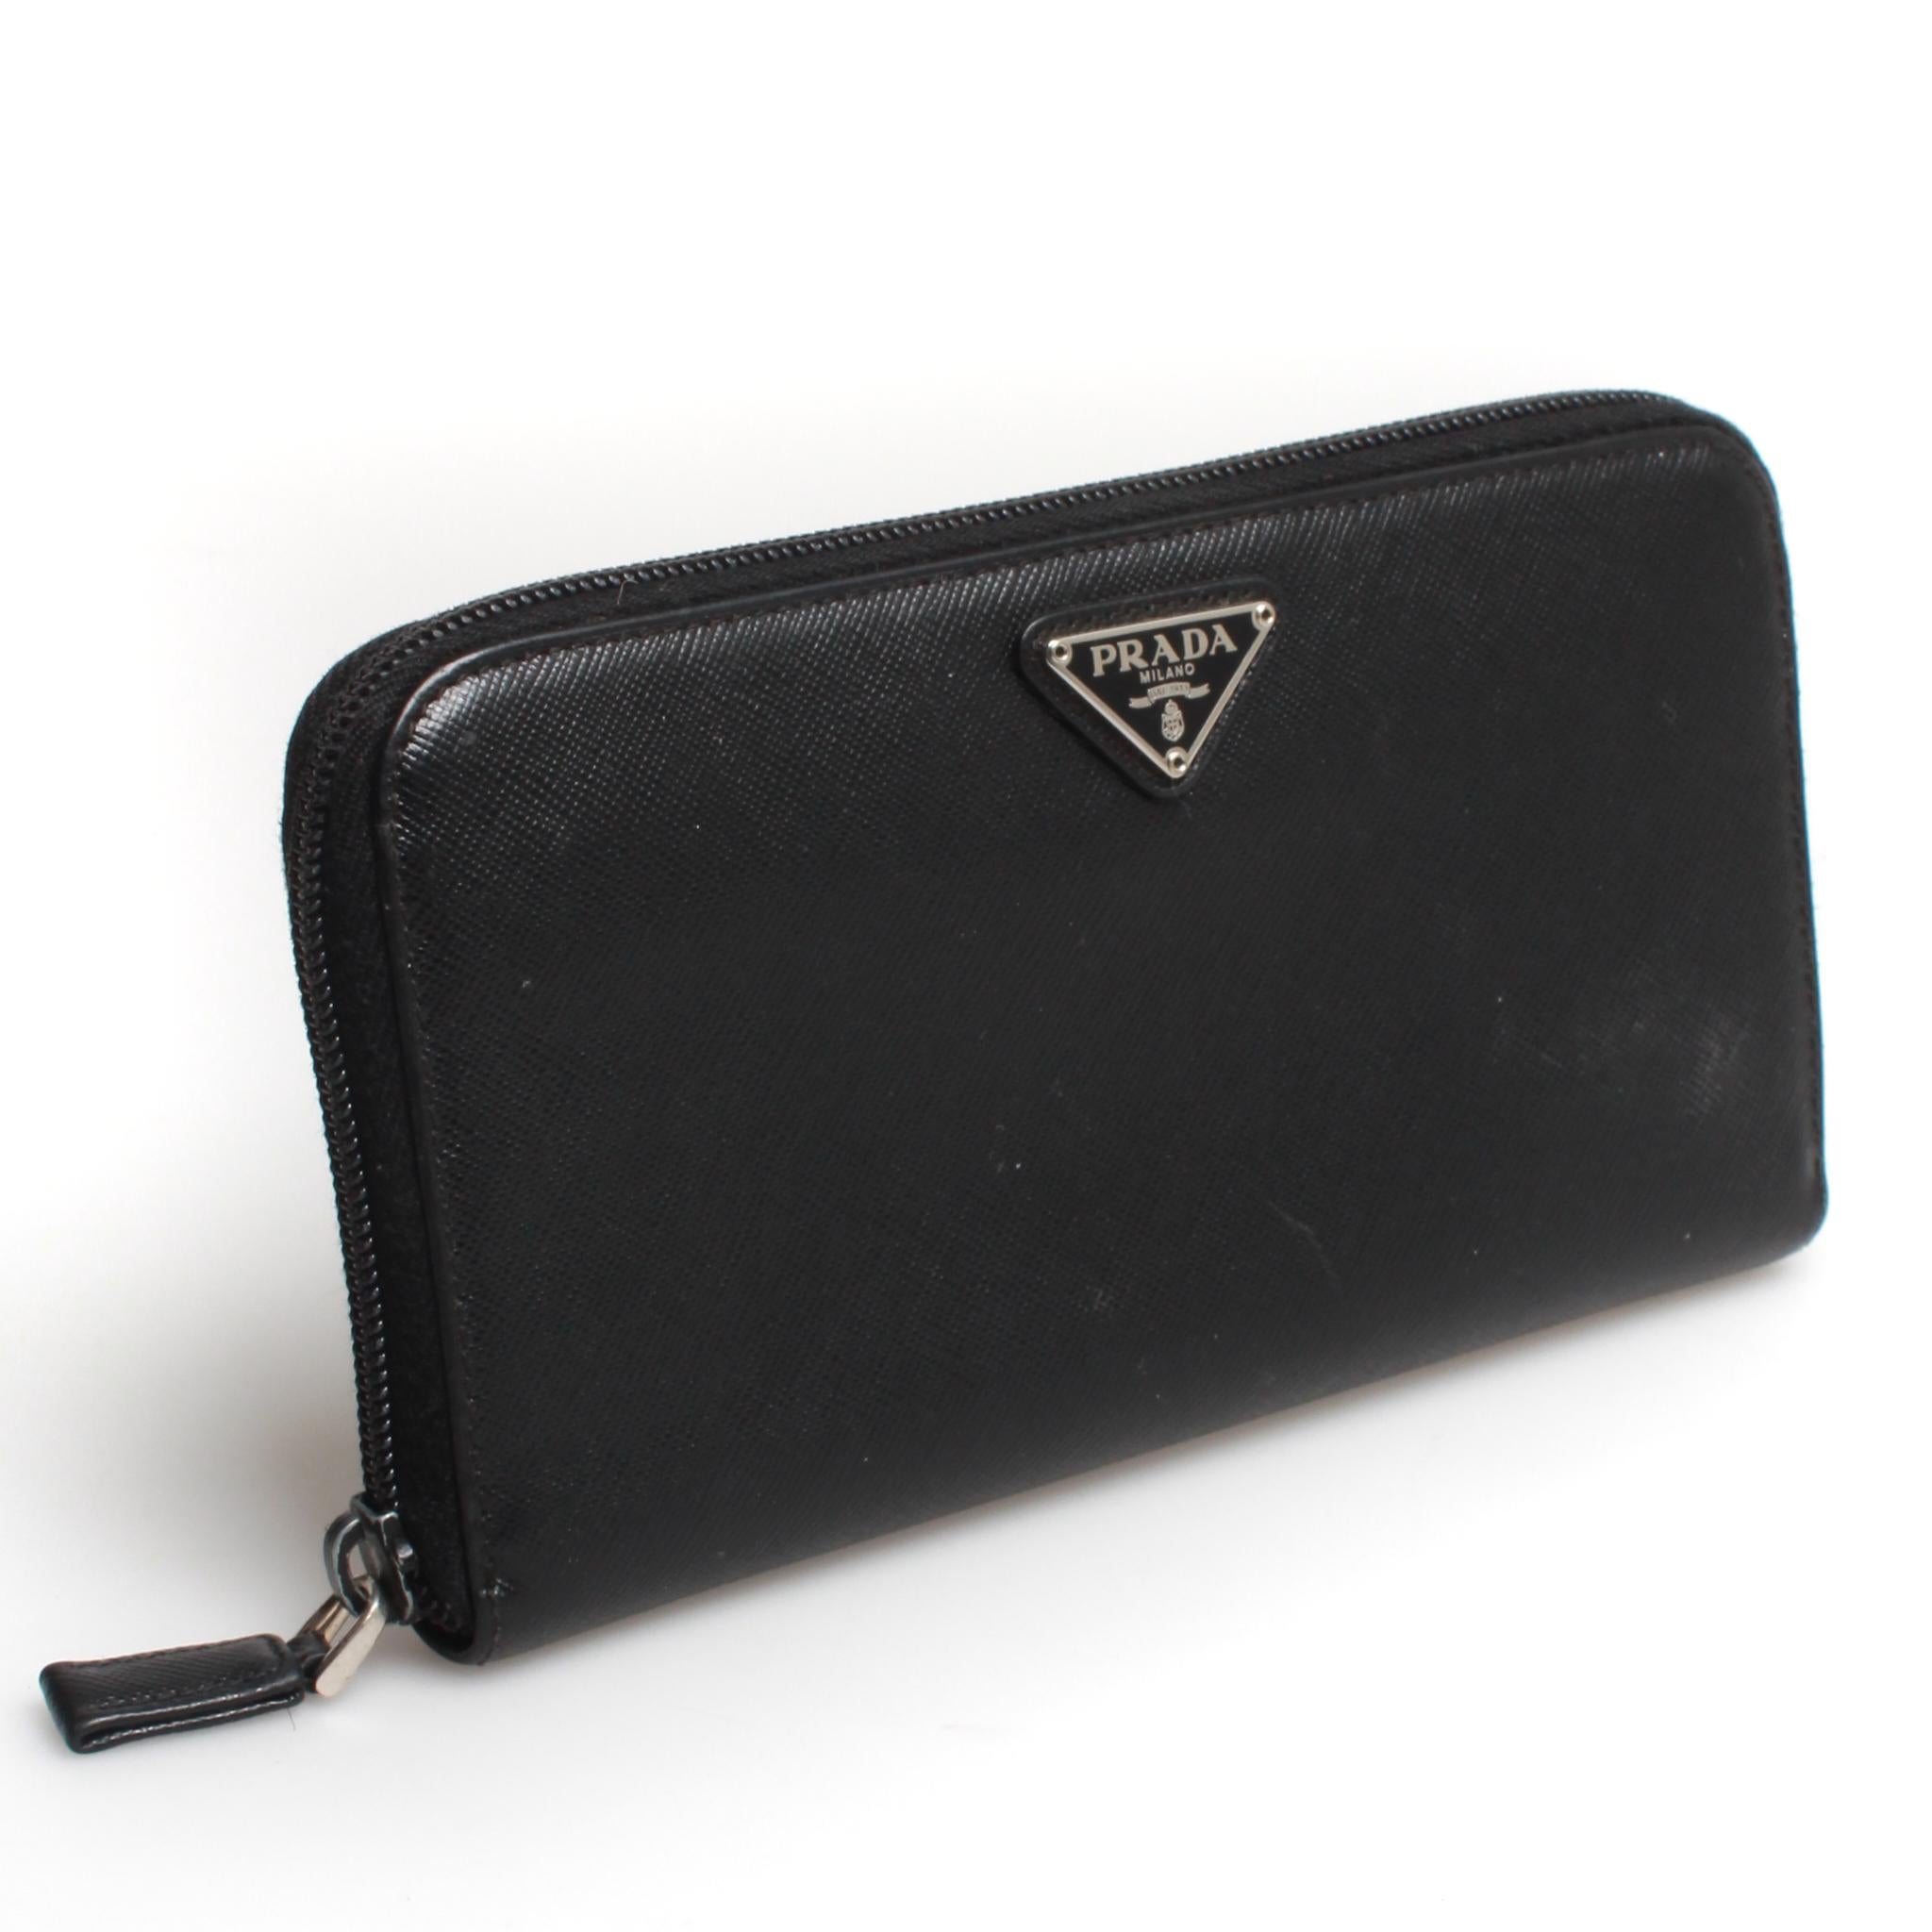 Classic PRADA saffiano leather zip travel wallet in black.

